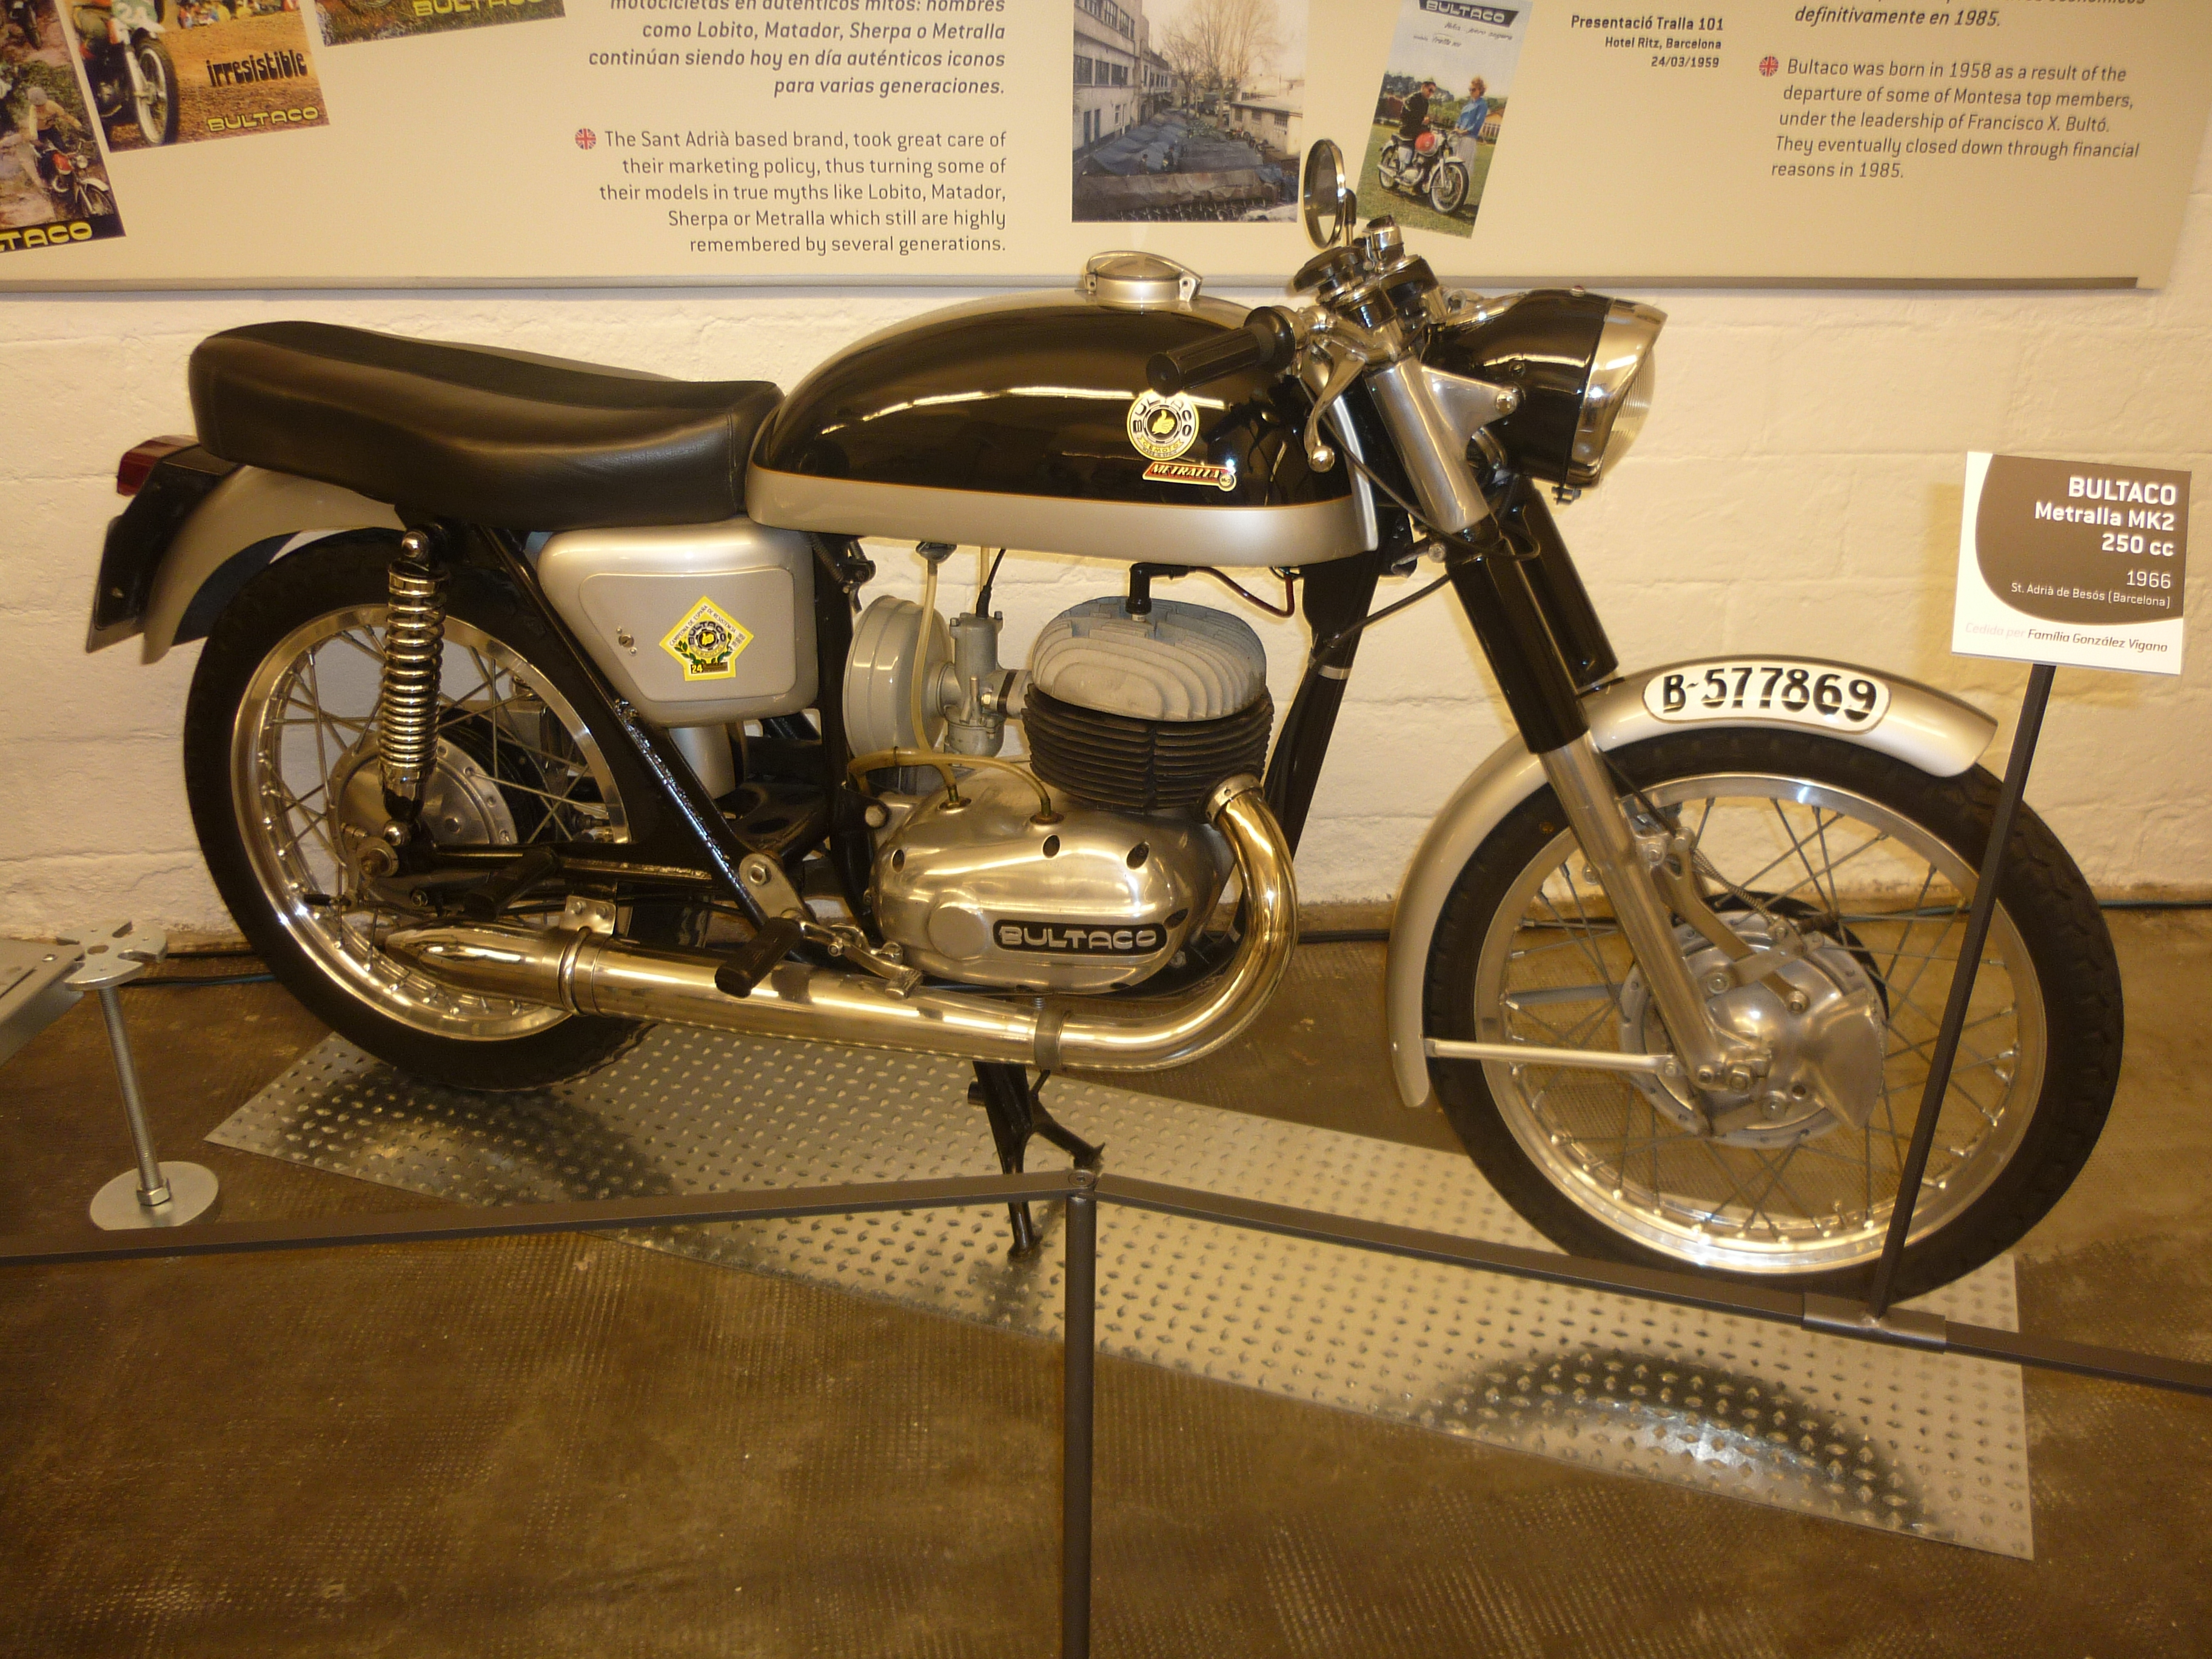 File:Bultaco Metralla MK2 250cc 1966.JPG - Wikimedia Commons